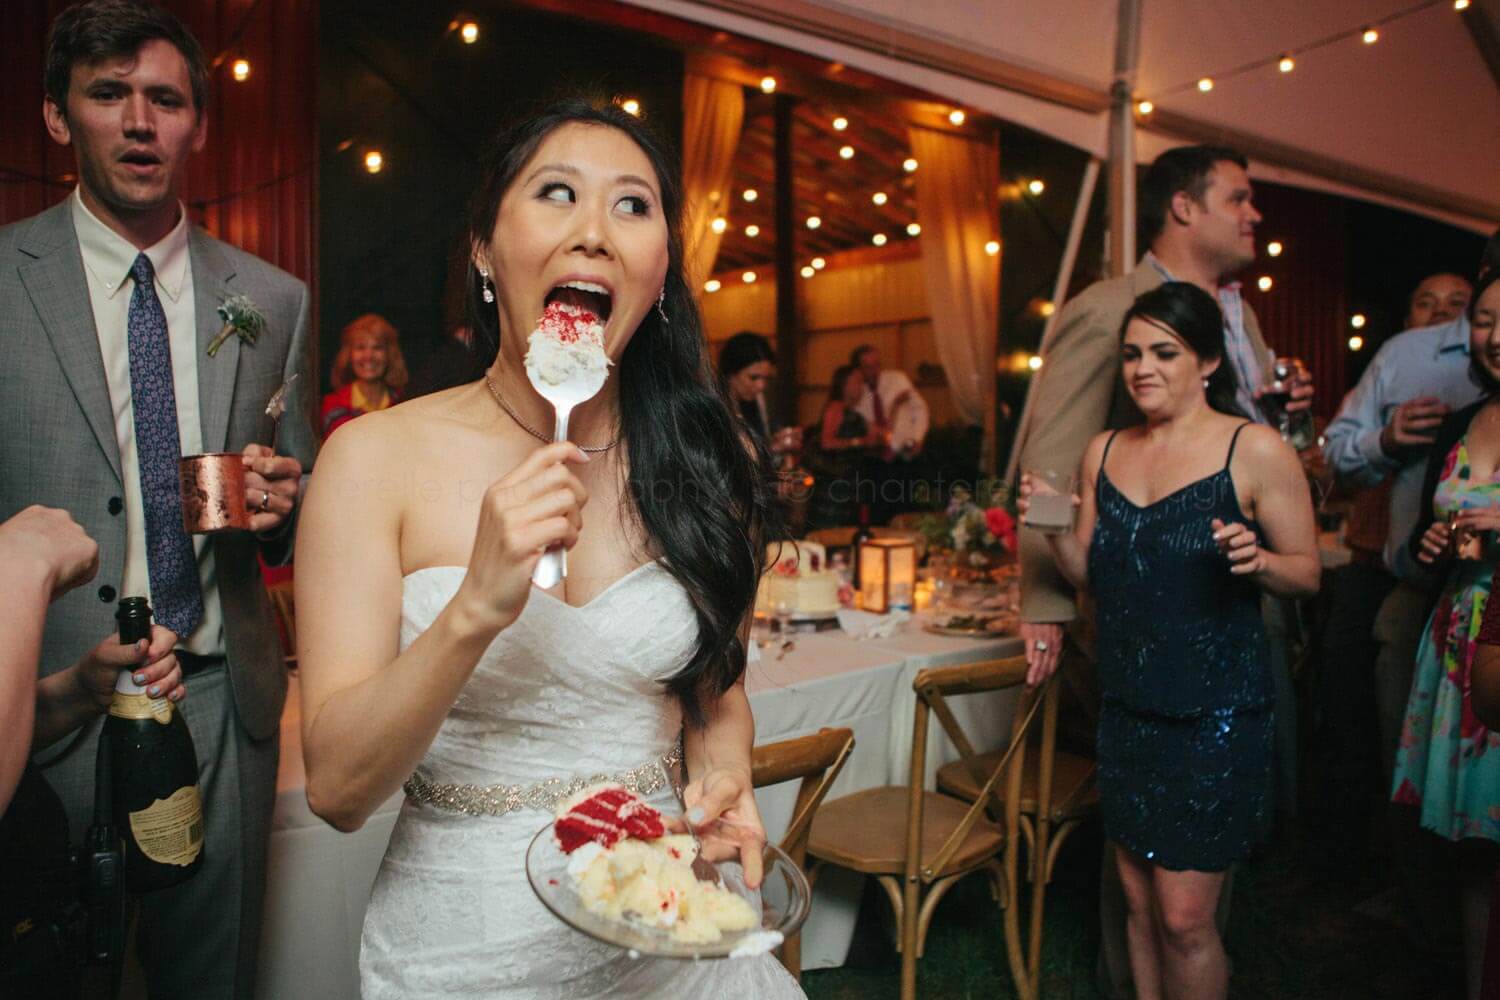 bride licking cake cutting server